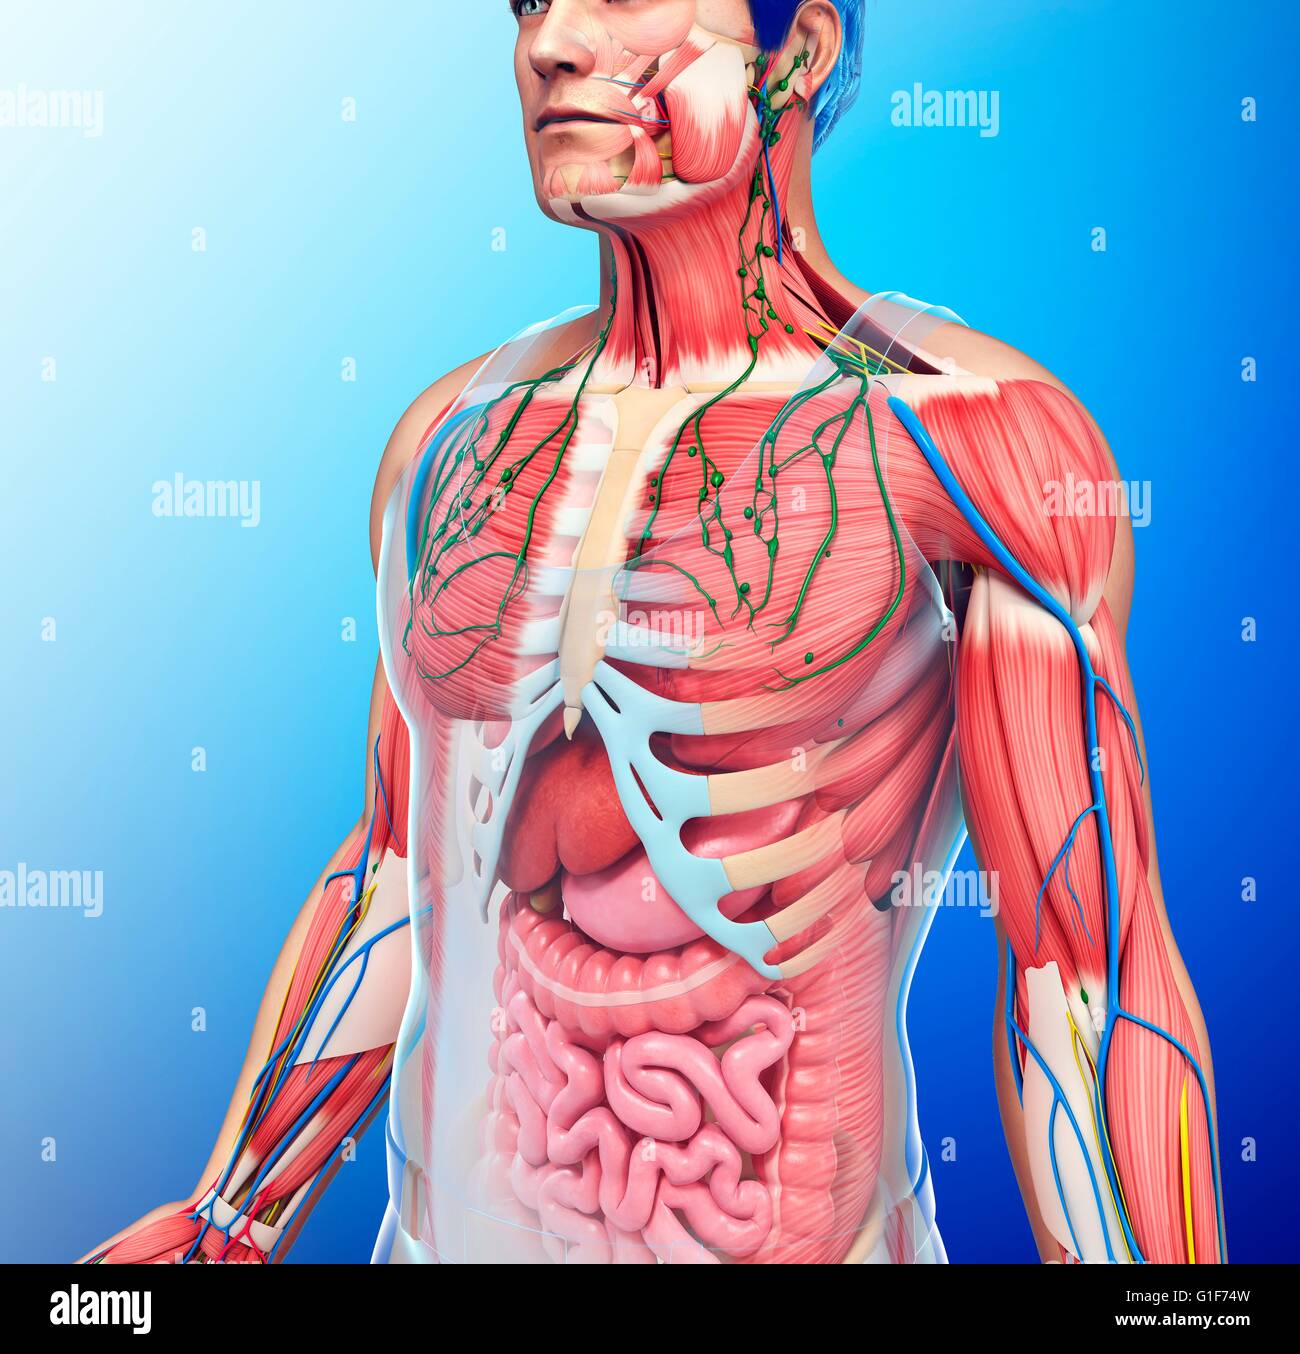 Anatom A Del Pecho Humano Ilustraci N Fotograf A De Stock Alamy